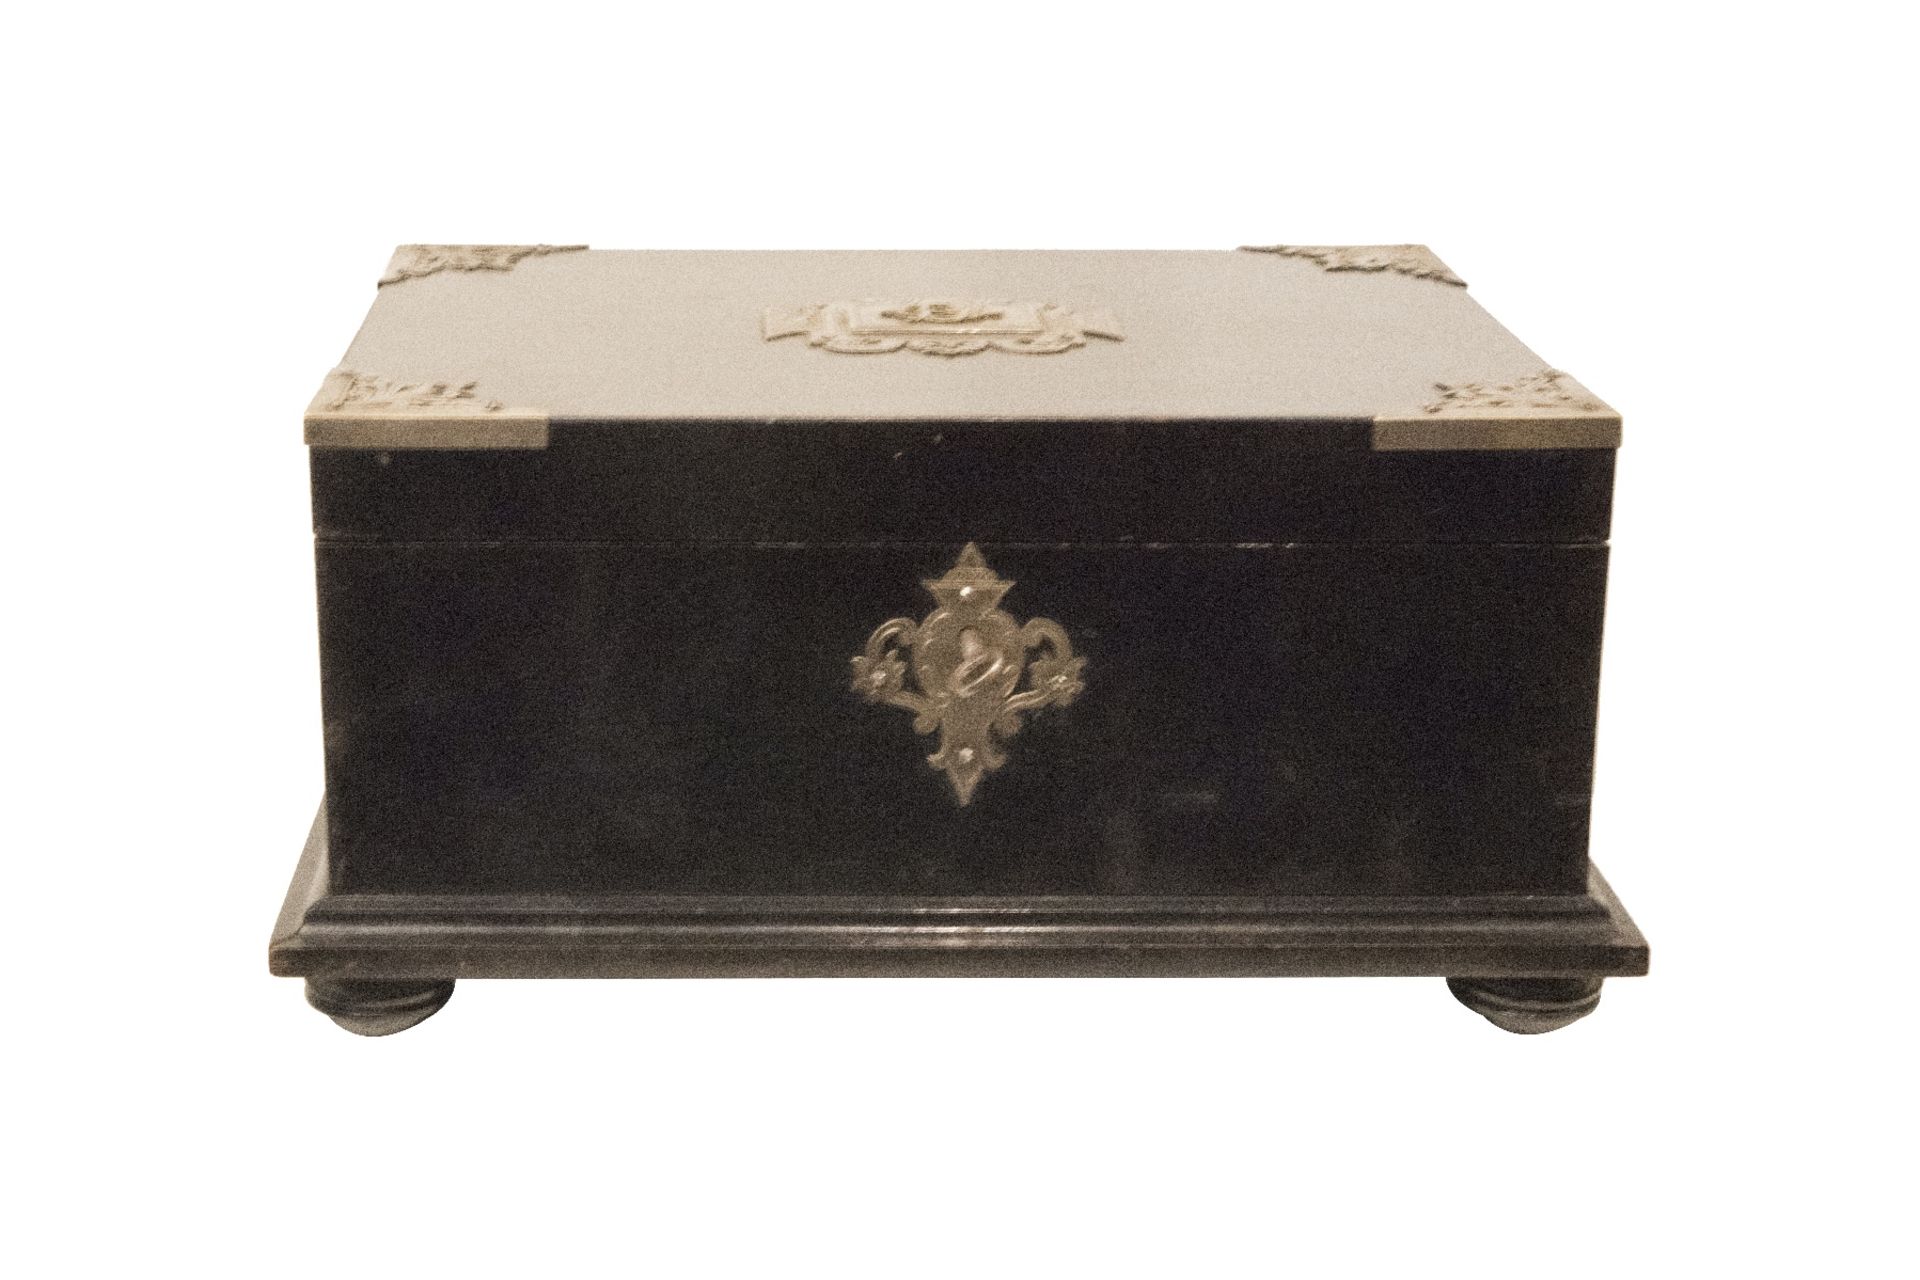 Holzschatulle mit Metallbeschlaegen | Wooden casket with metal fittings - Image 4 of 9